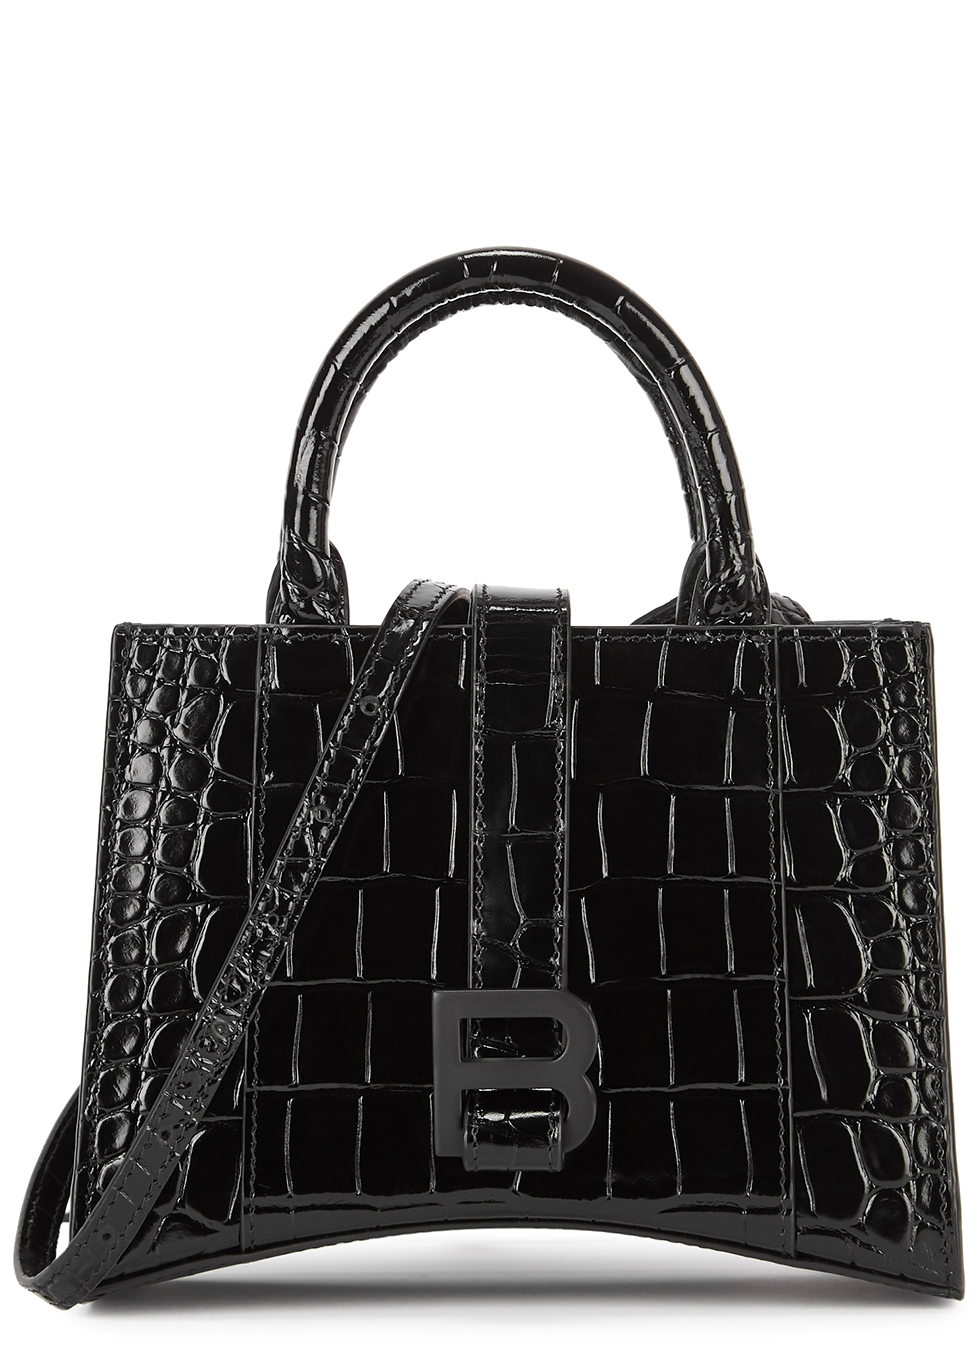 Balenciaga Hourglass black leather top handle bag - Harvey Nichols